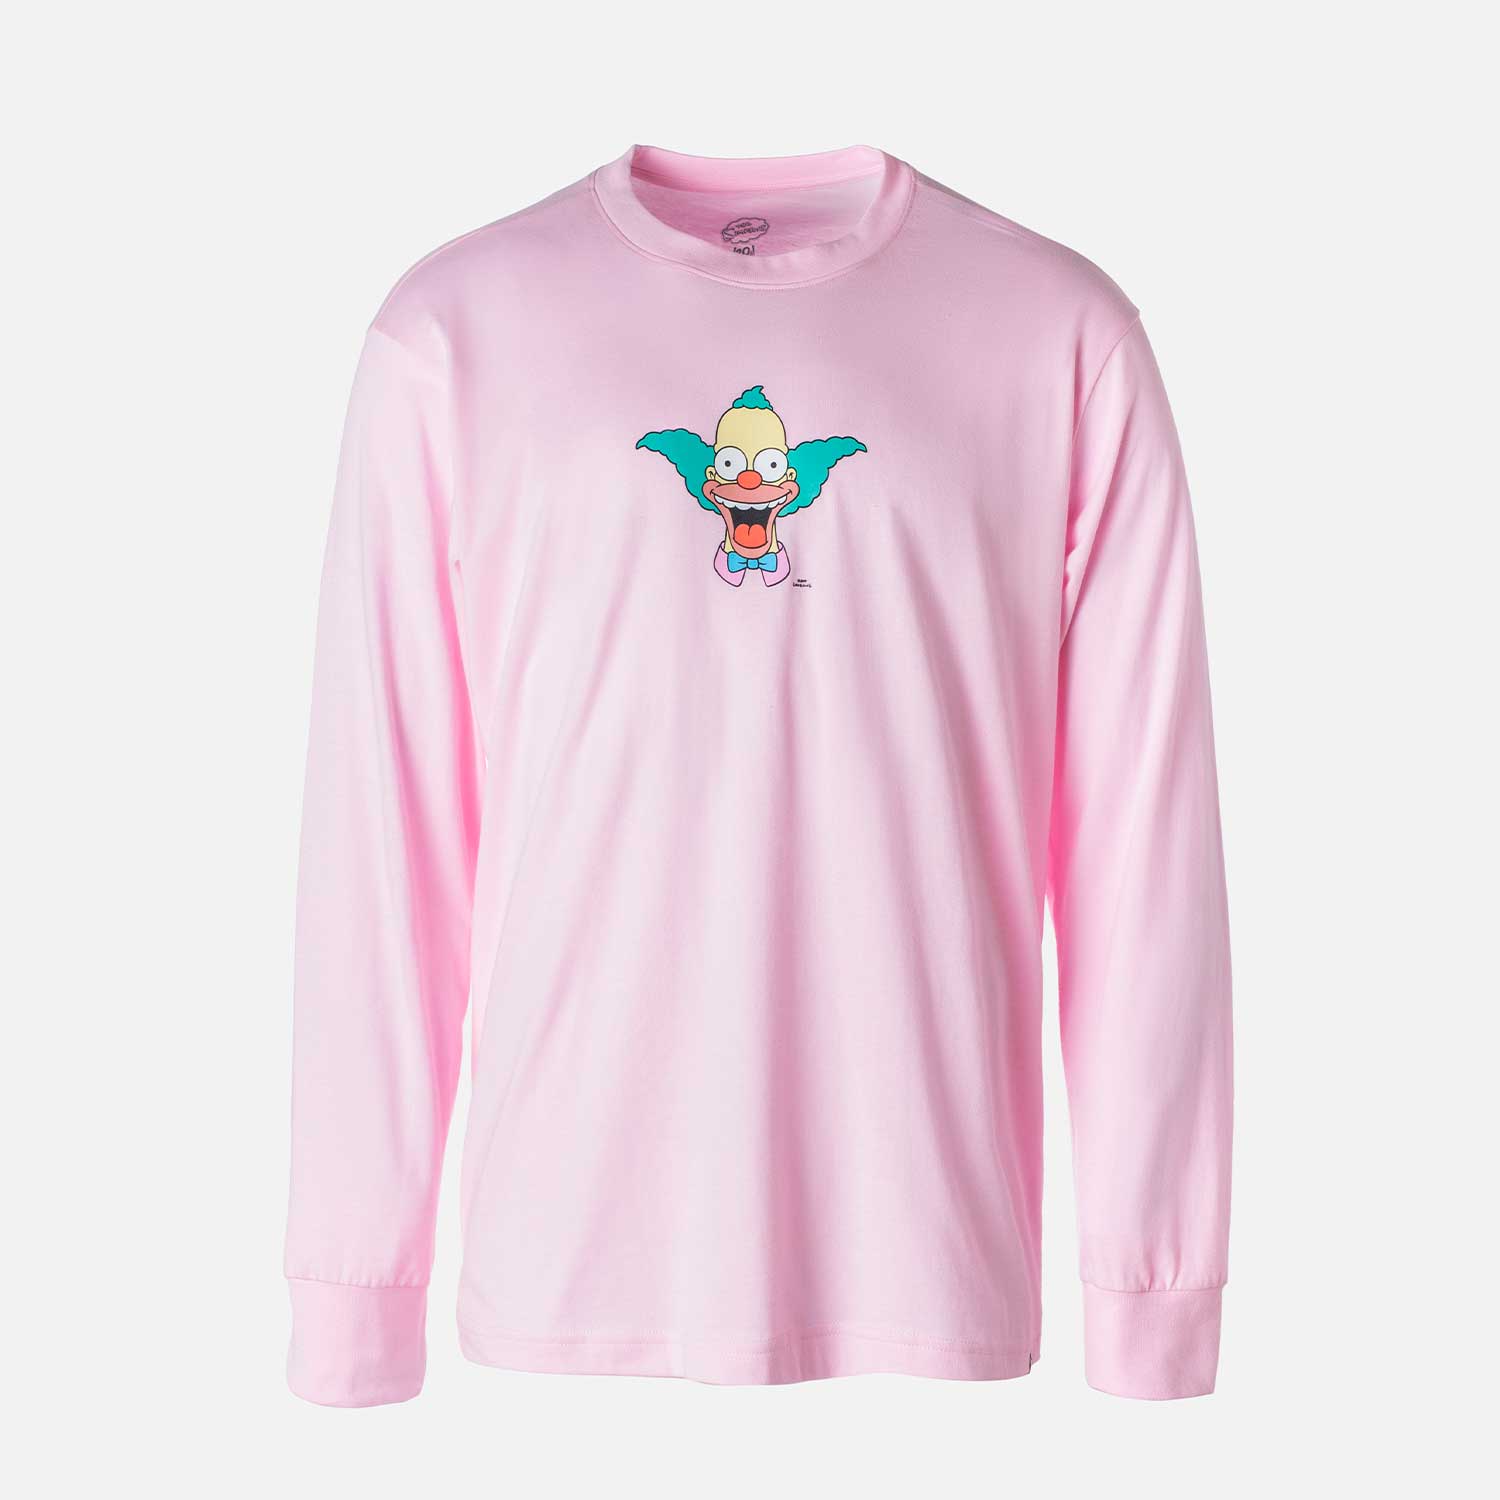 Camiseta de Los Simpson rosada manga larga para hombre S-0